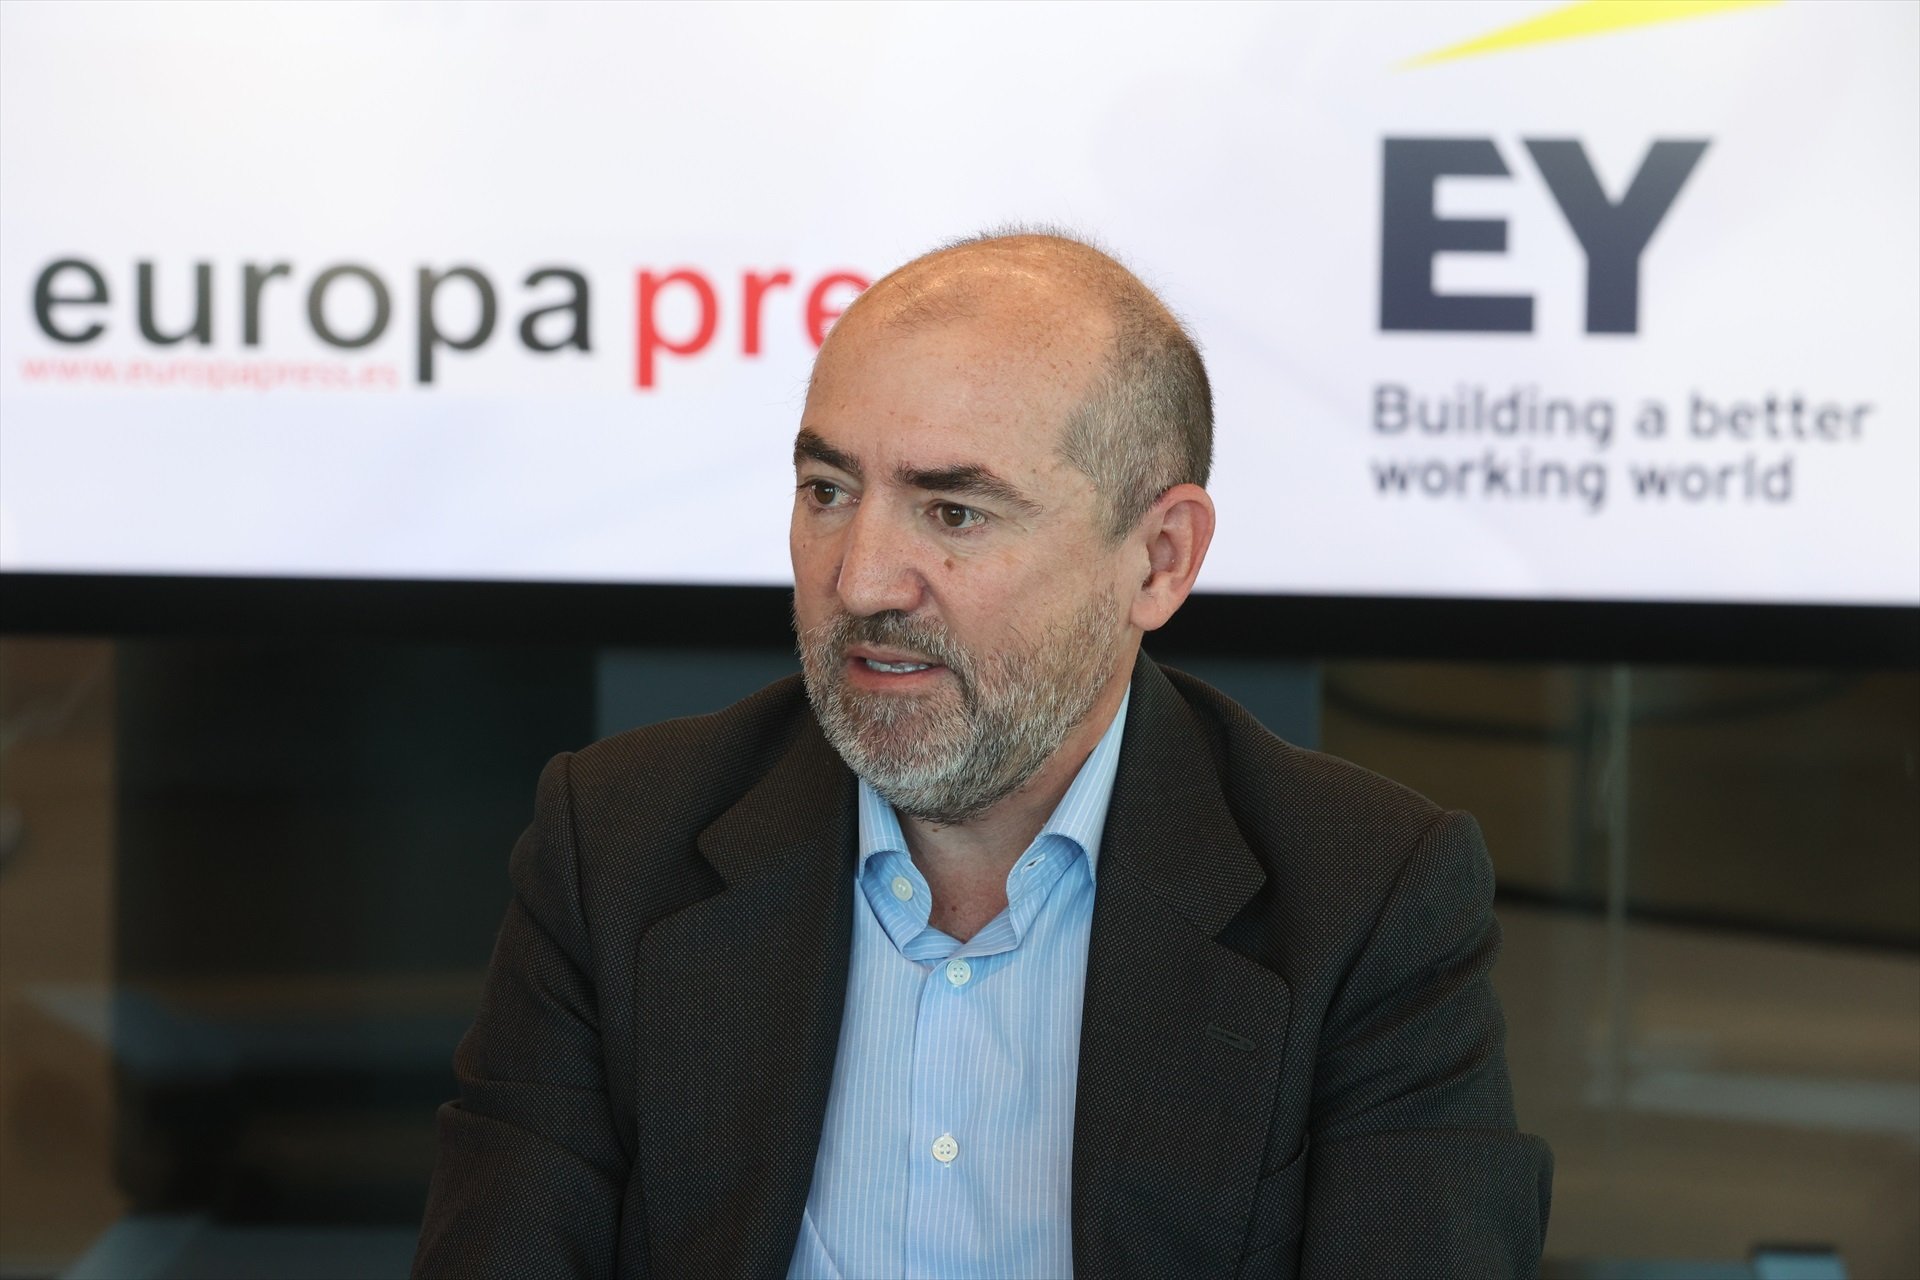 El Director Corporate e Industrias, Santander España, Jorge Otamendi Ozores. | Fotografia: Europa Press